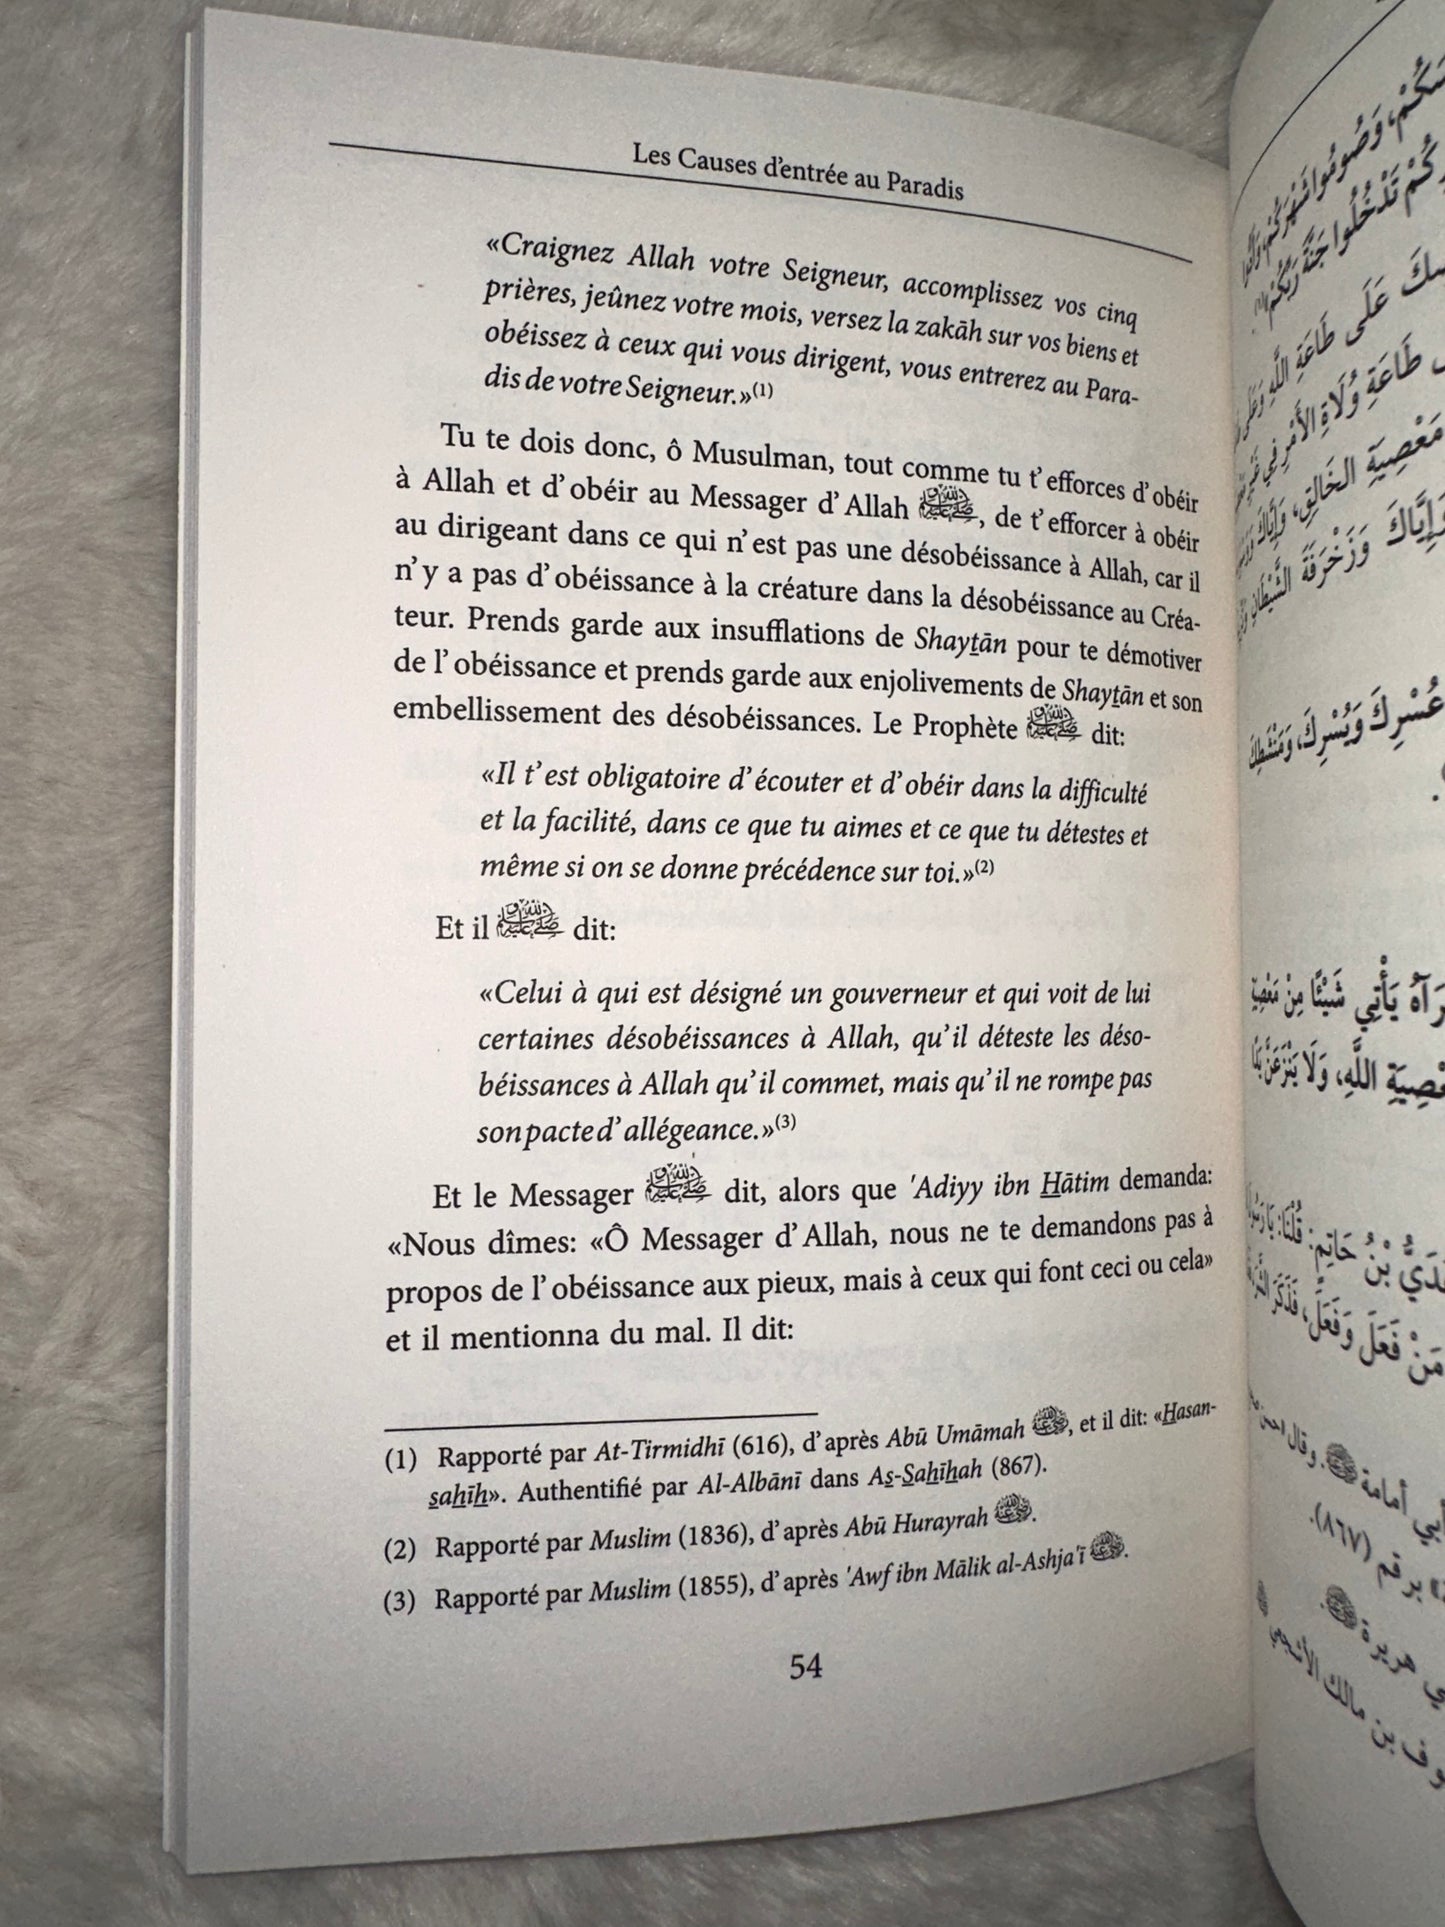 Les causes d'entrée au Paradis - Cheikh Soulayman Ar-Ruhayli - Ibn Badis